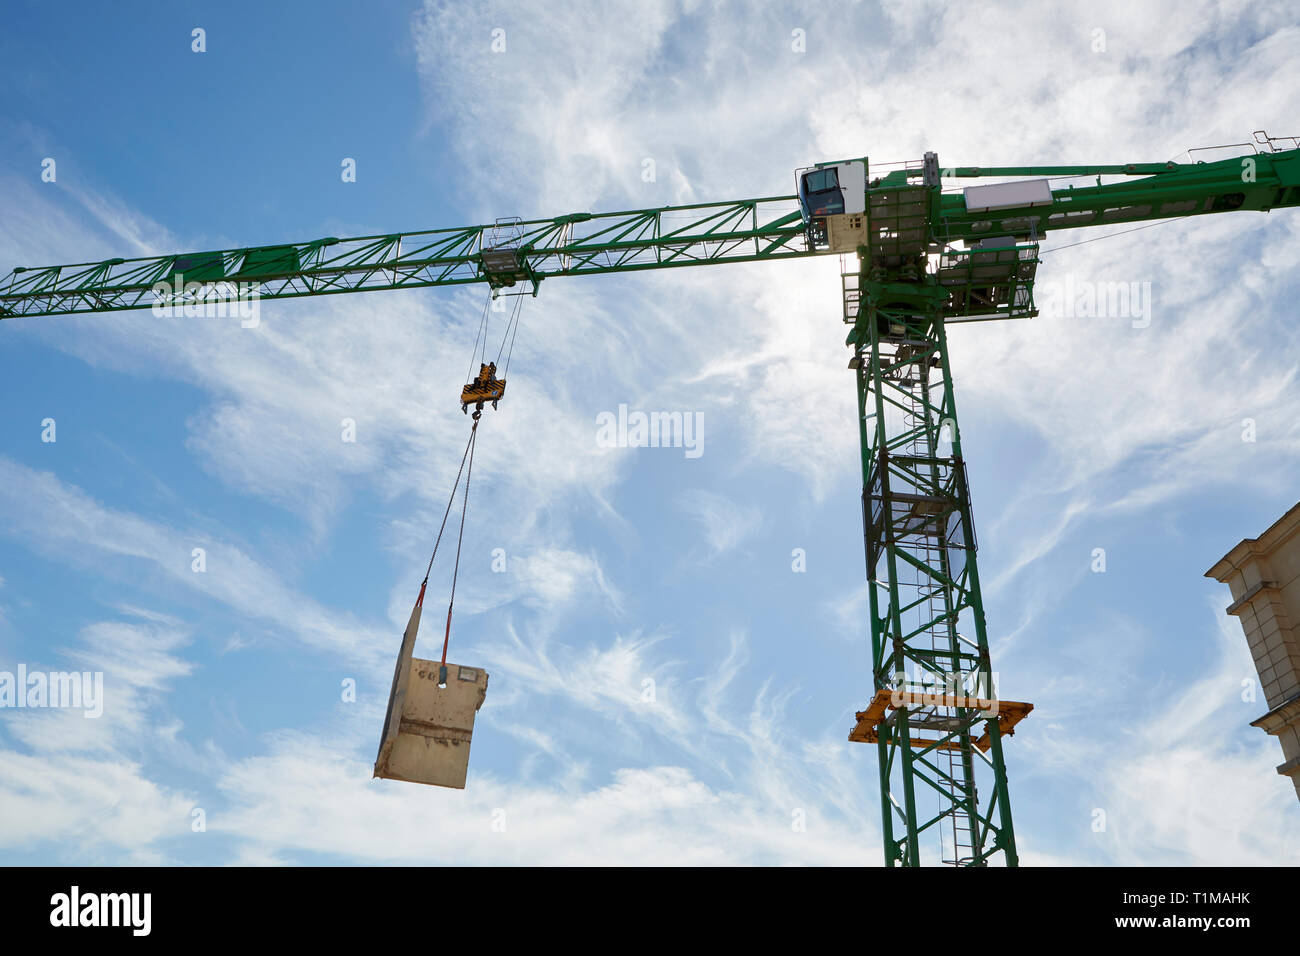 Tower crane lifting construction materials Stock Photo